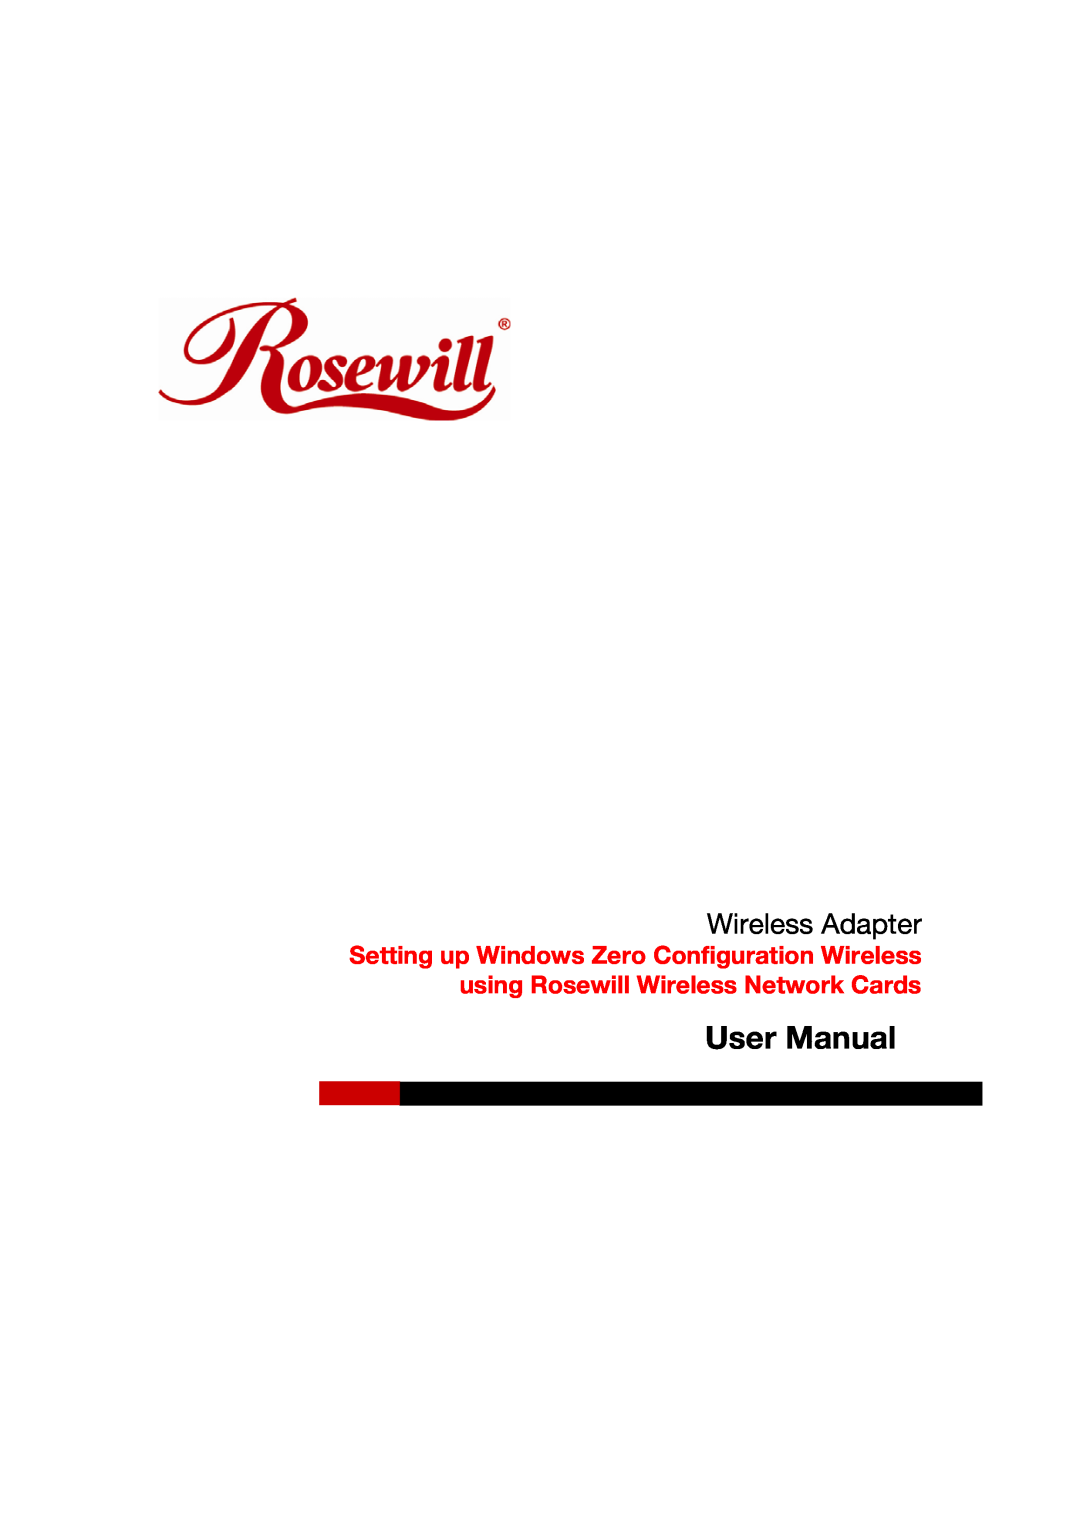 Rosewill Network Card user manual User Manual, Wireless Adapter 